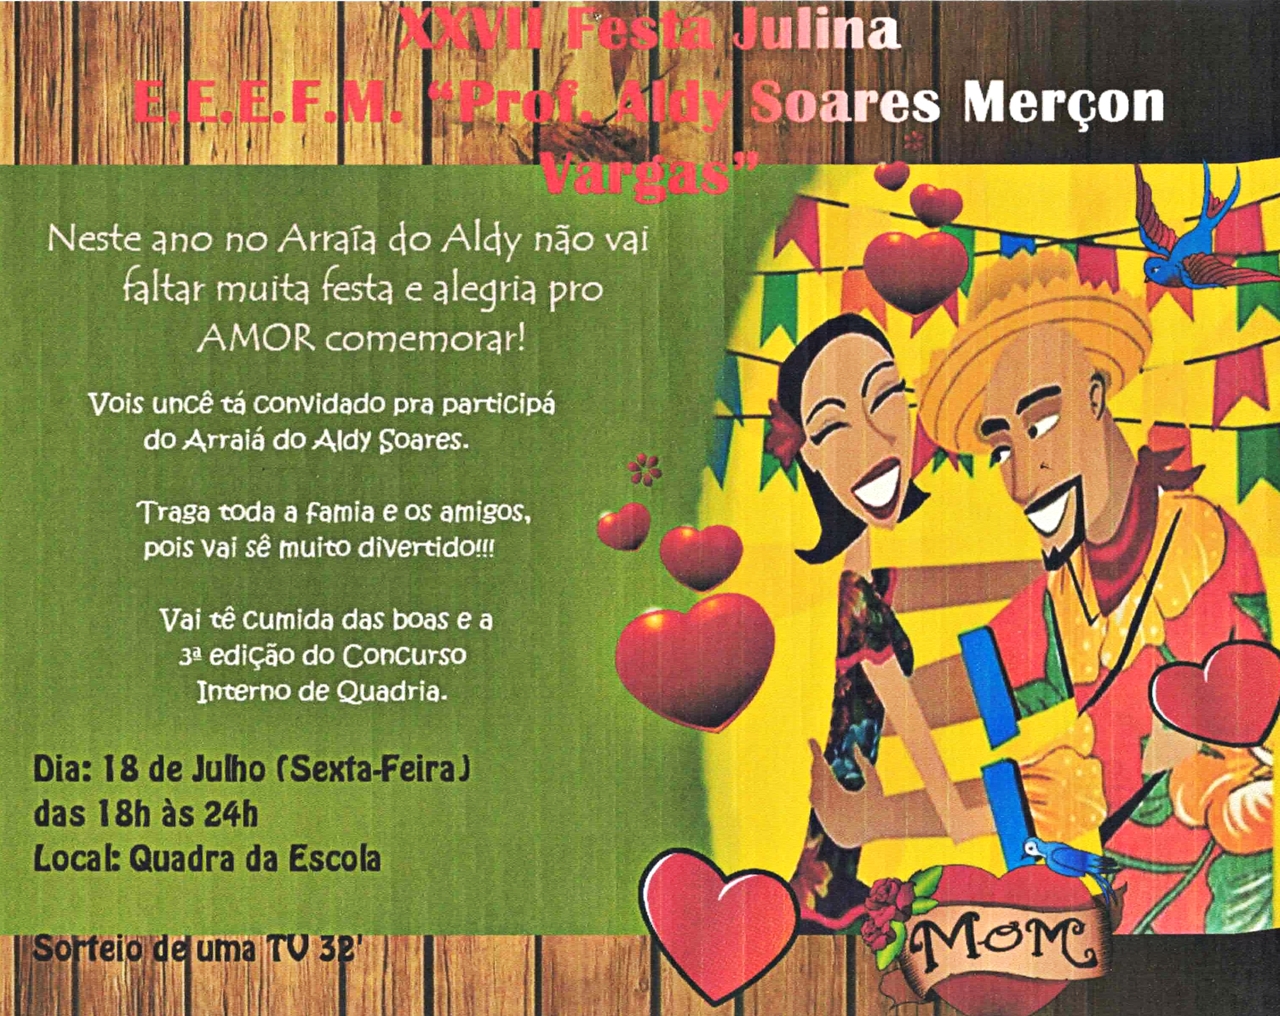 XXVII Festa Julina da EEEFM Prof° Aldy Soares Merçon Vargas será no dia 18 de julho